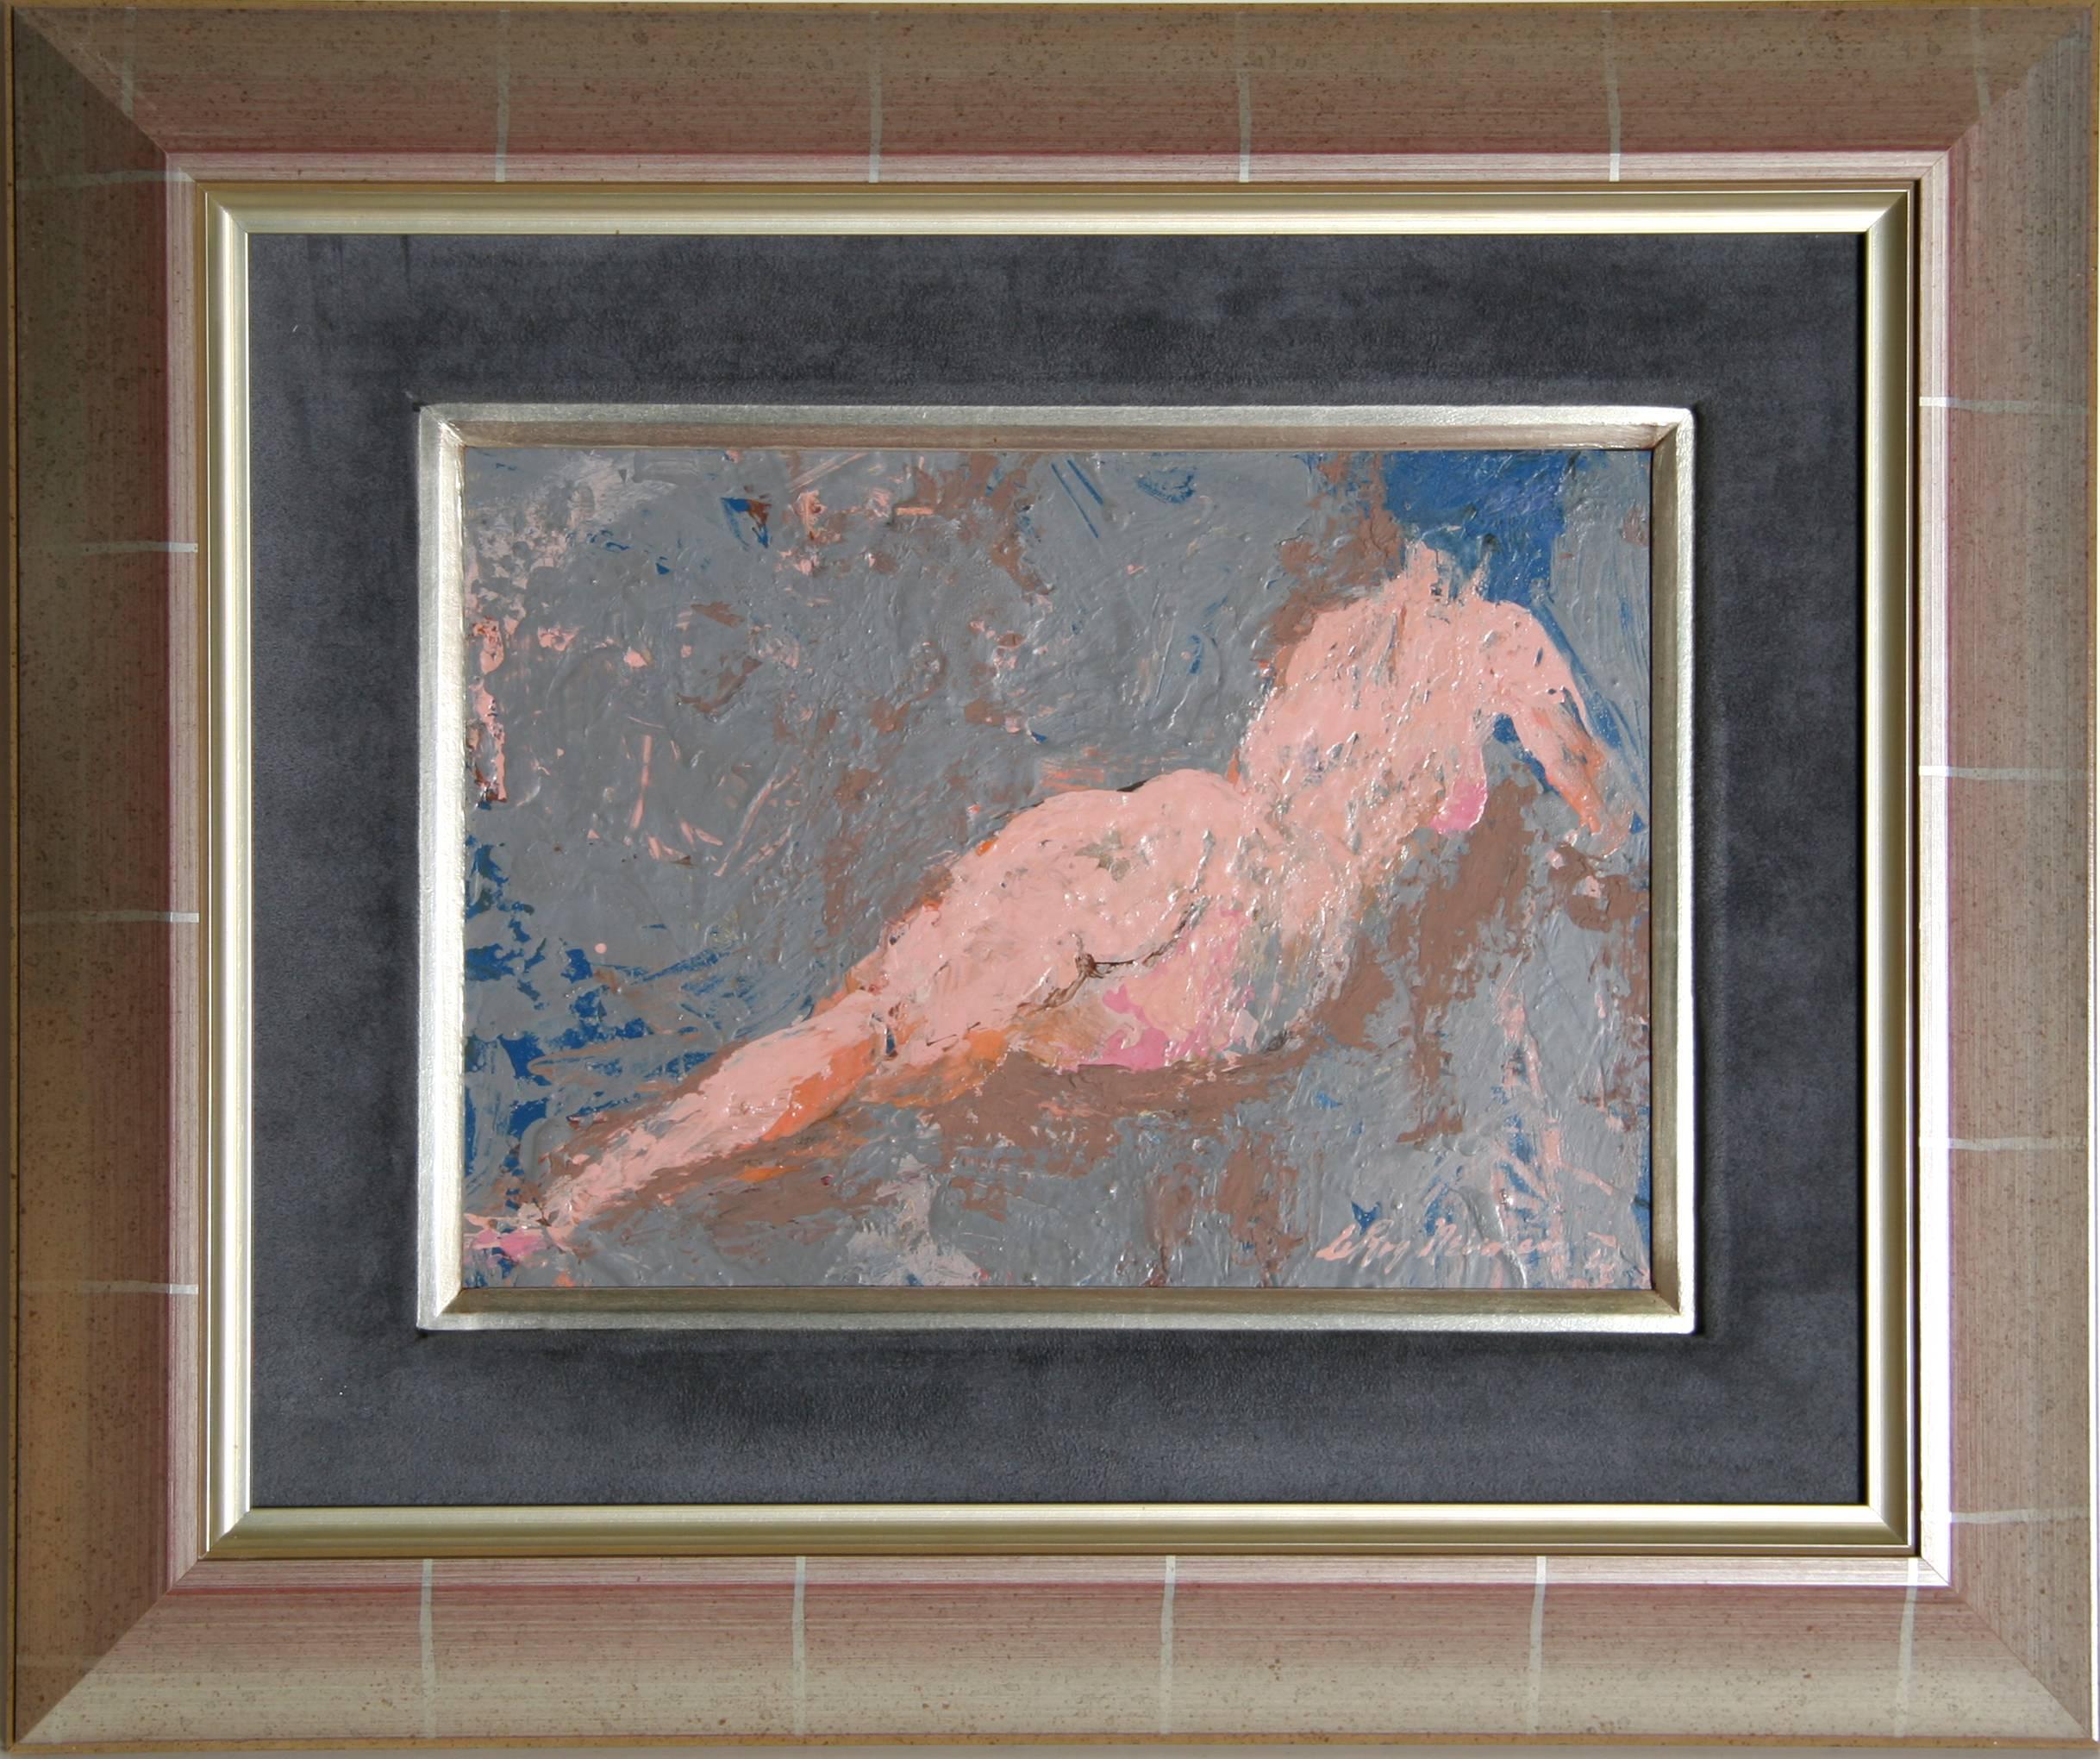 Leroy Neiman Nude Painting – Nude, Ölgemälde aus der Playboy-Ära von LeRoy Neiman